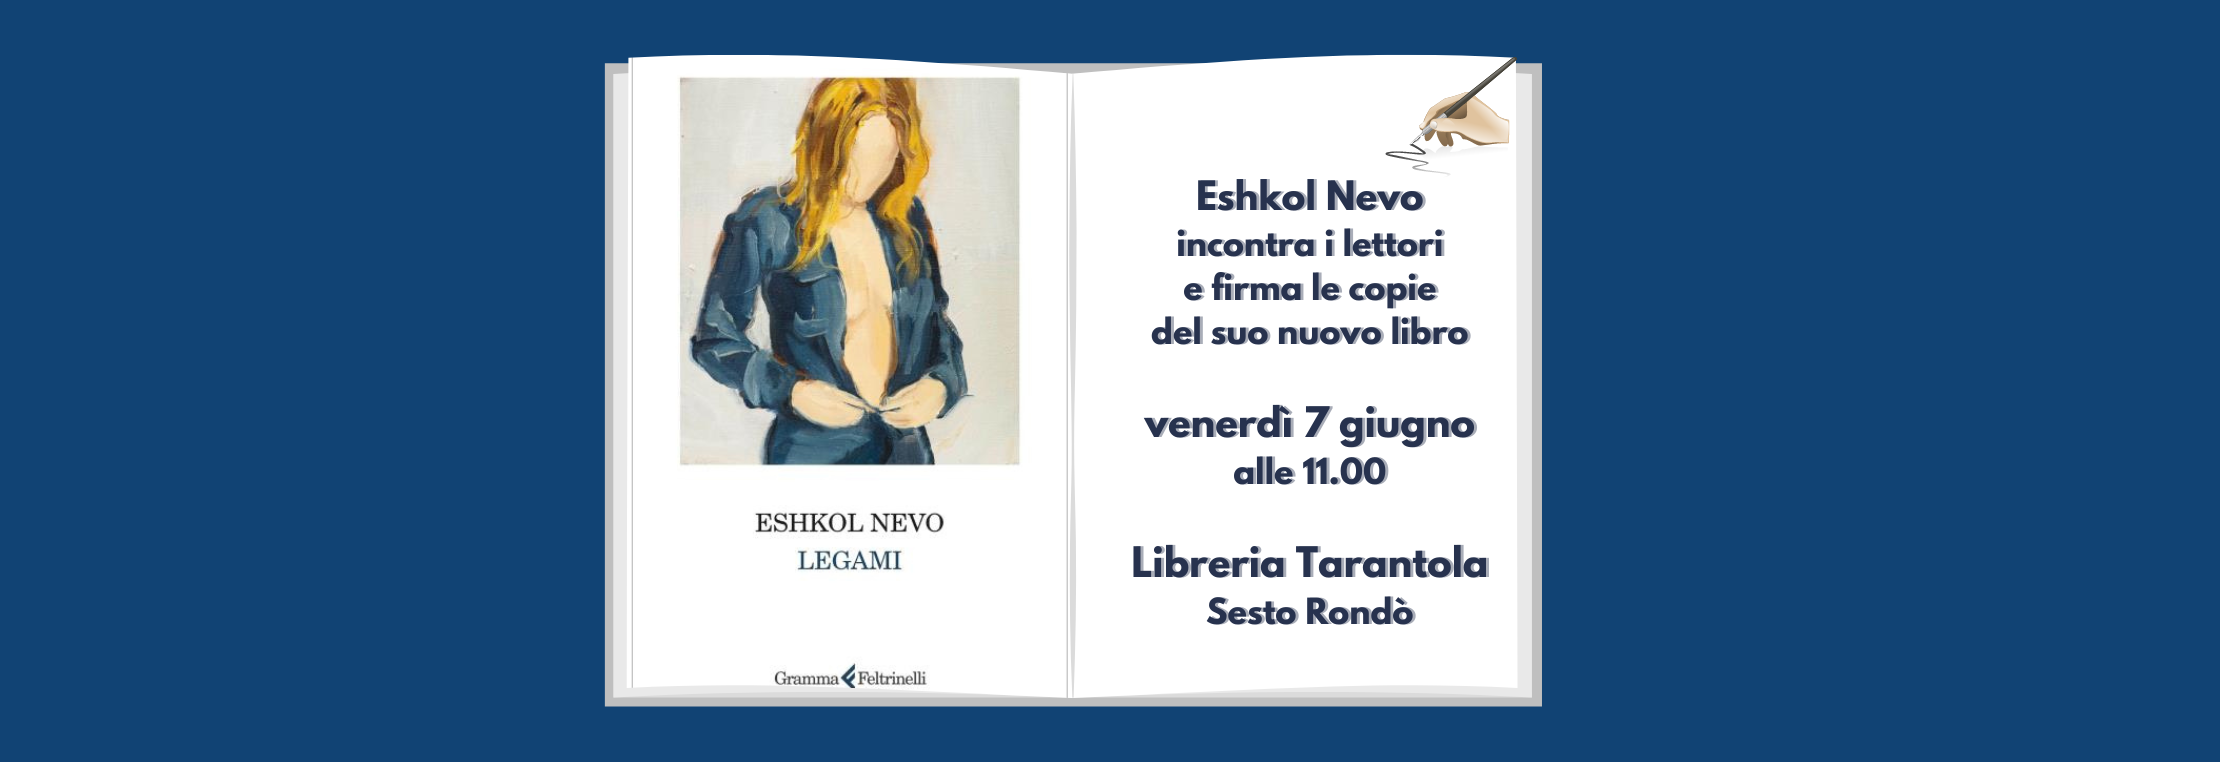 Eshkol Nevo incontra i lettori alla libreria Tarantola